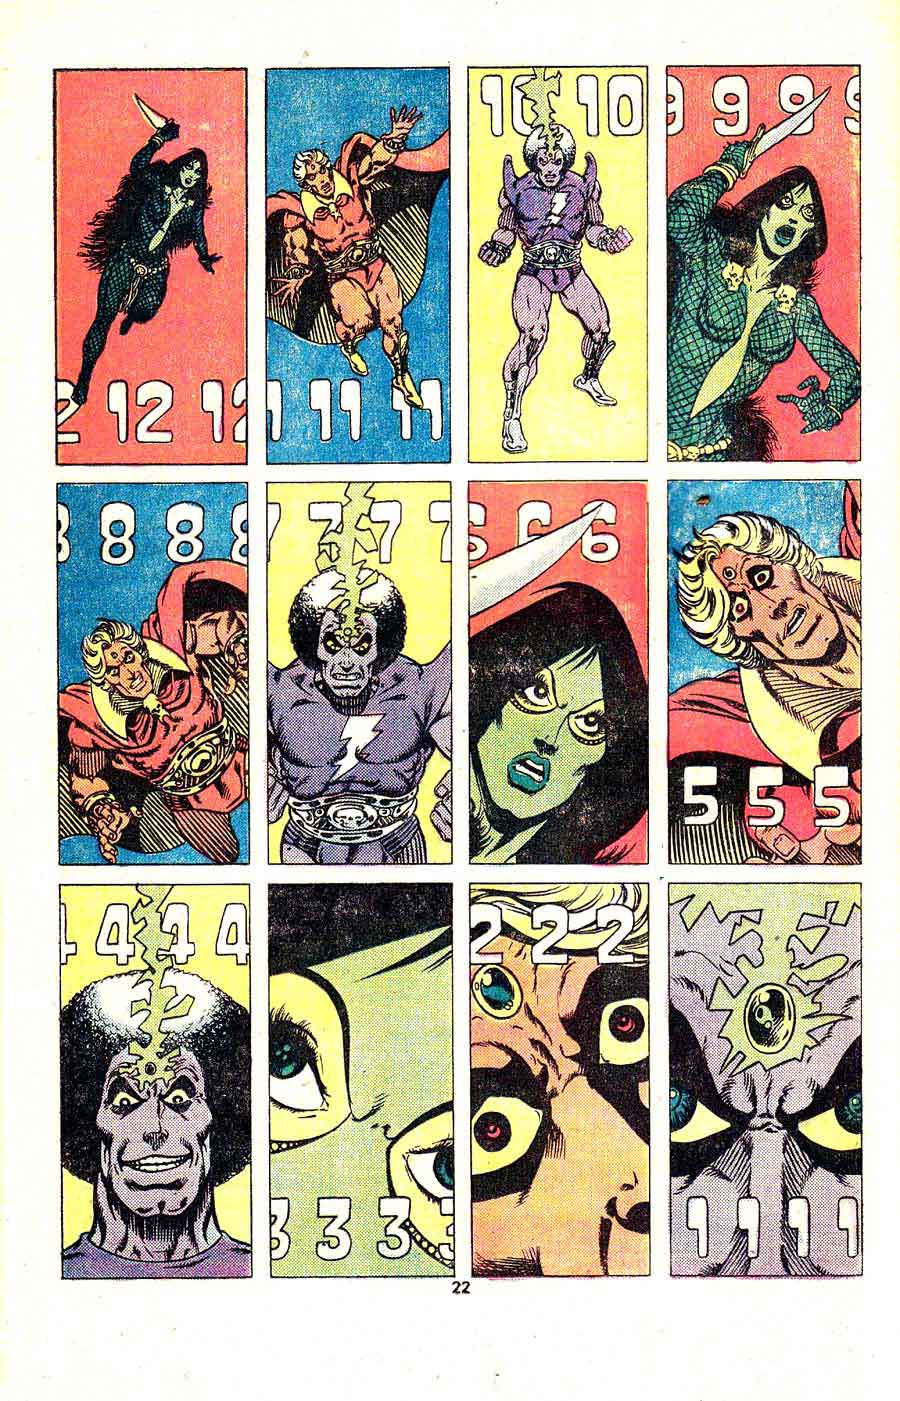 Warlock v1 #9 marvel 1970s bronze age comic book page art by Jim Starlin